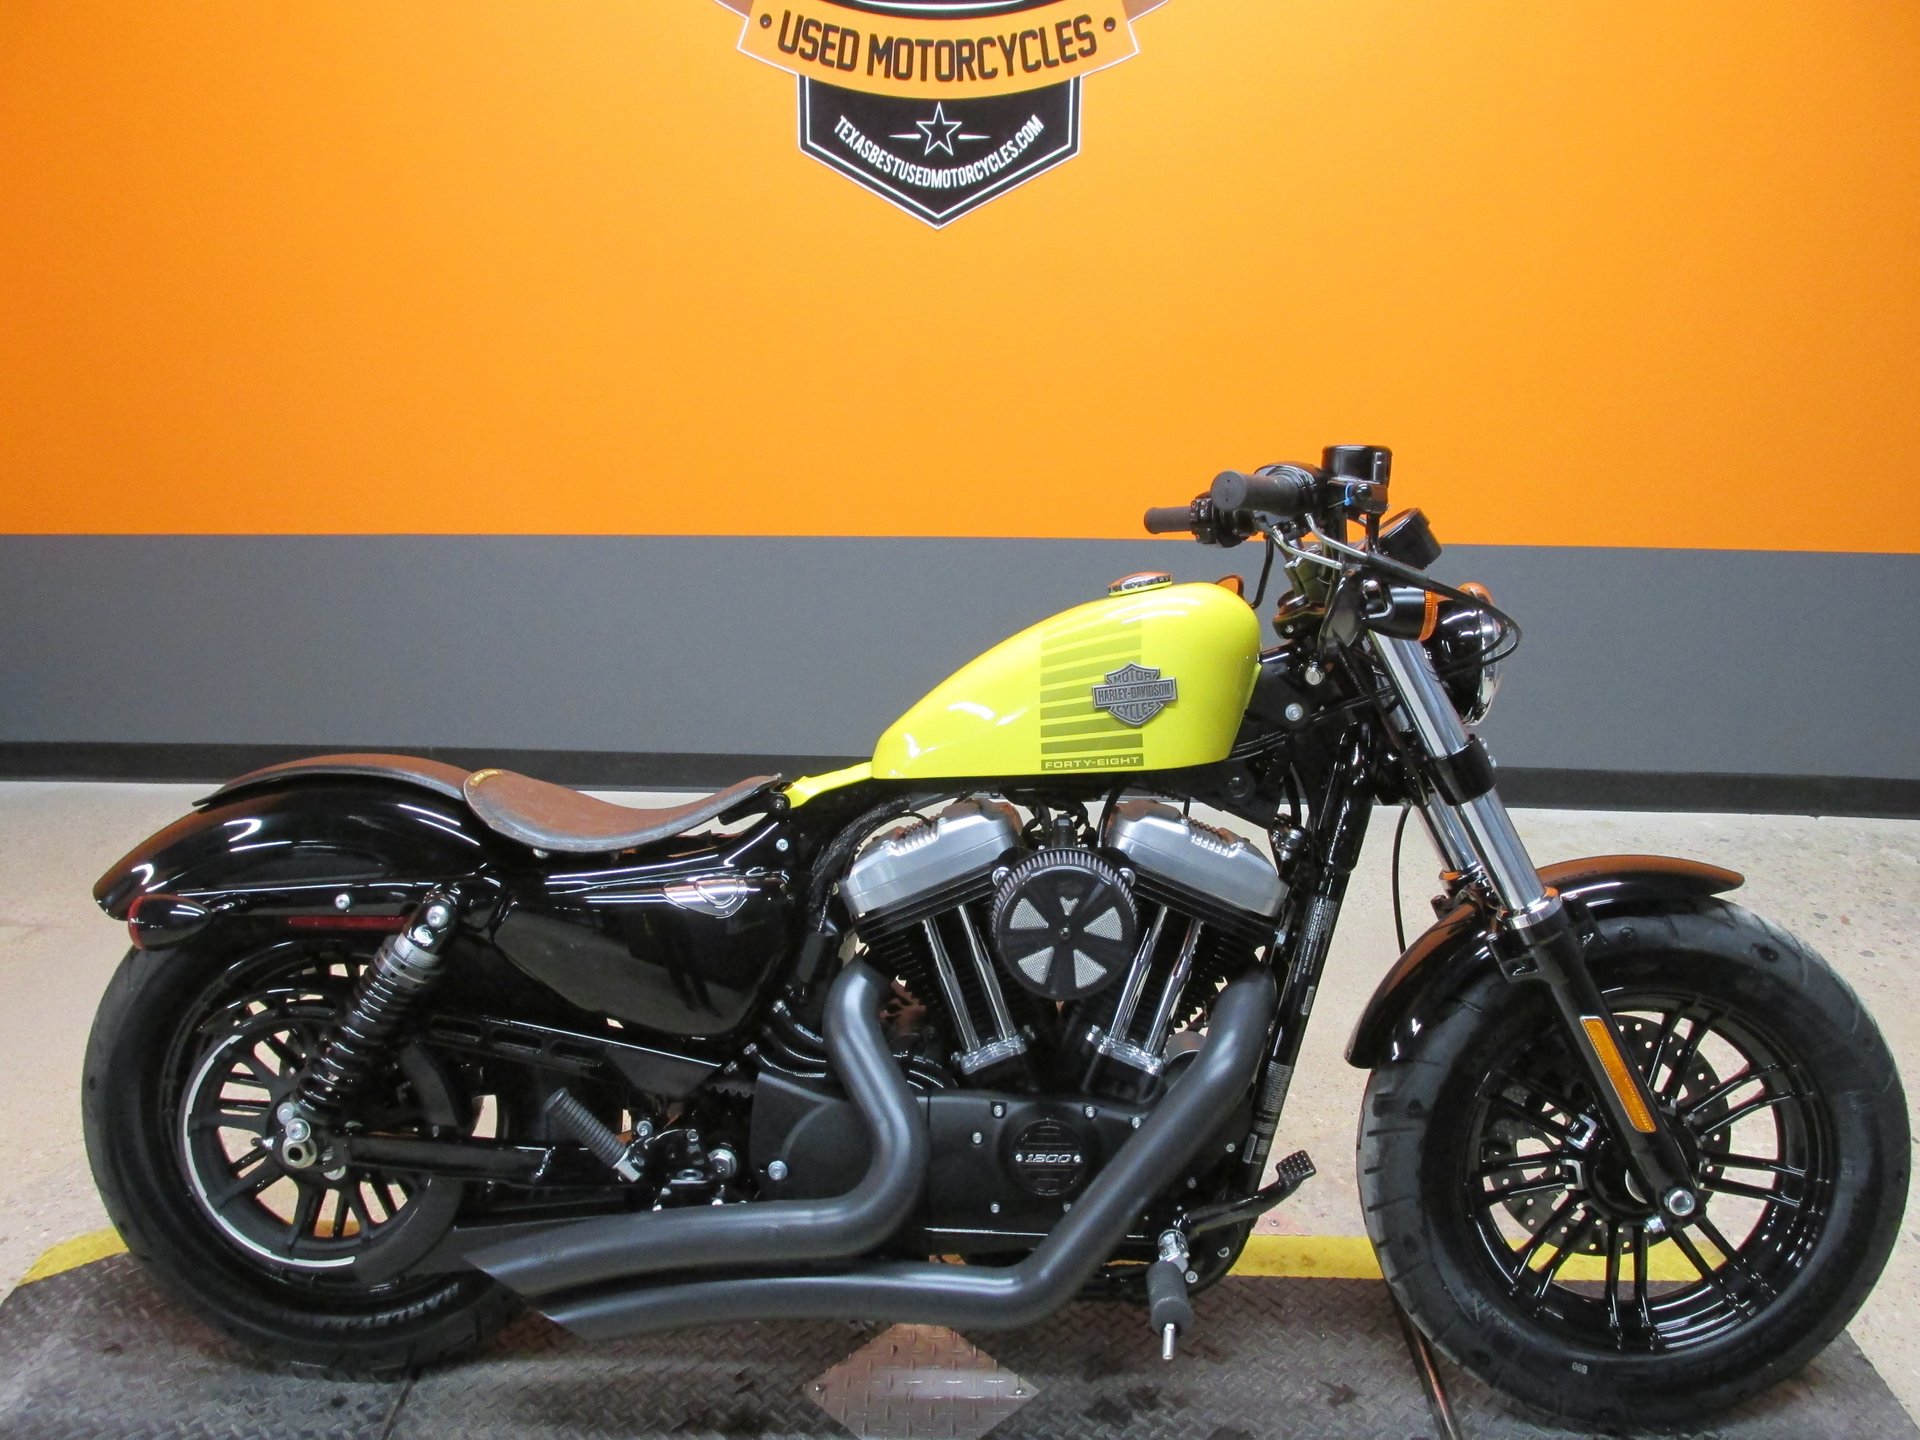 2017 Harley-Davidson Sportster 1200 | American Motorcycle Trading Company -  Used Harley Davidson Motorcycles